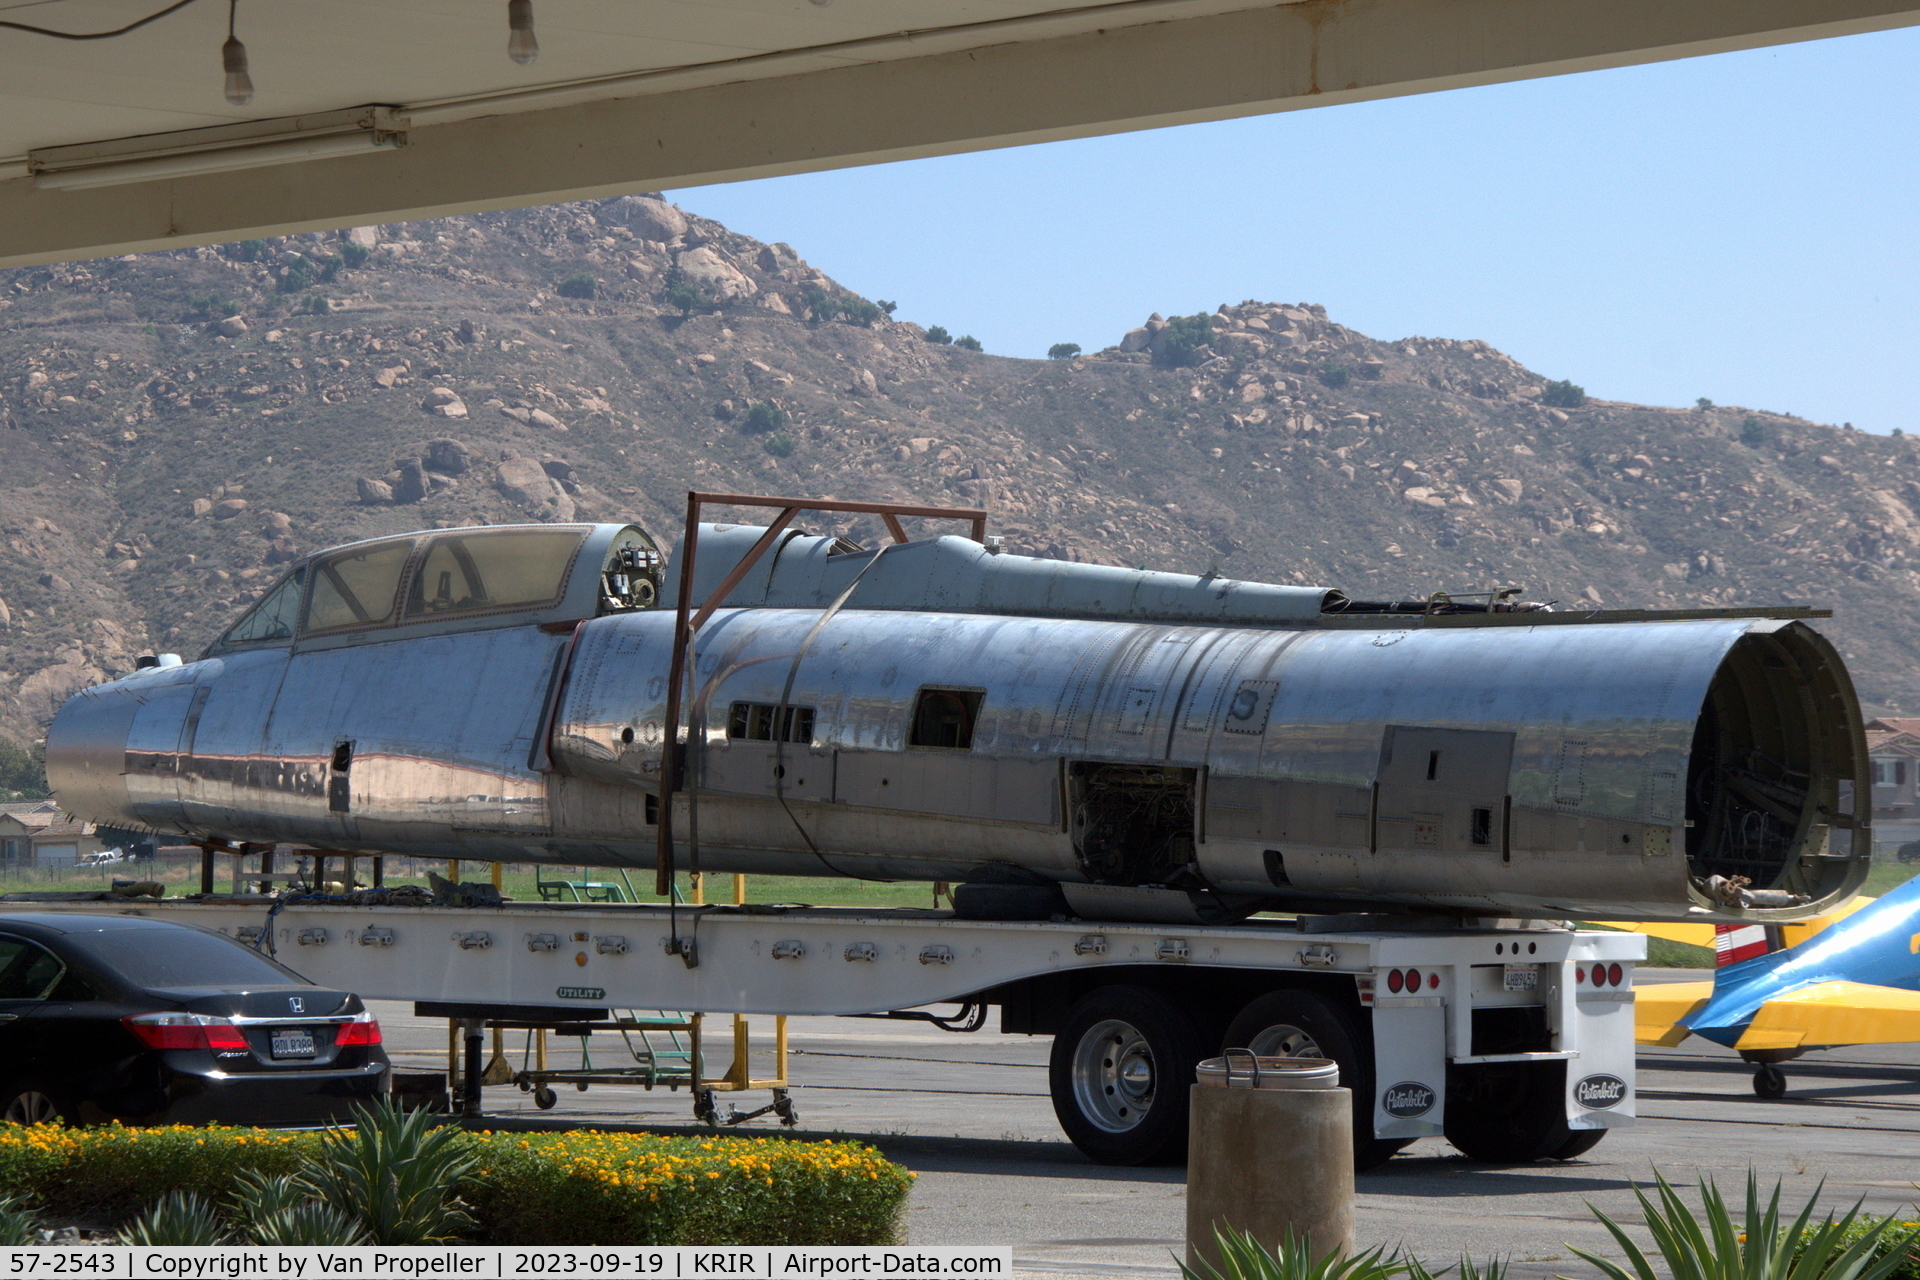 57-2543, 1957 Convair QF-106B Delta Dart C/N 8-27-37, Convair QF-106B Delta Dart fuselage on a flatbed trailer at Flabob airport, California.